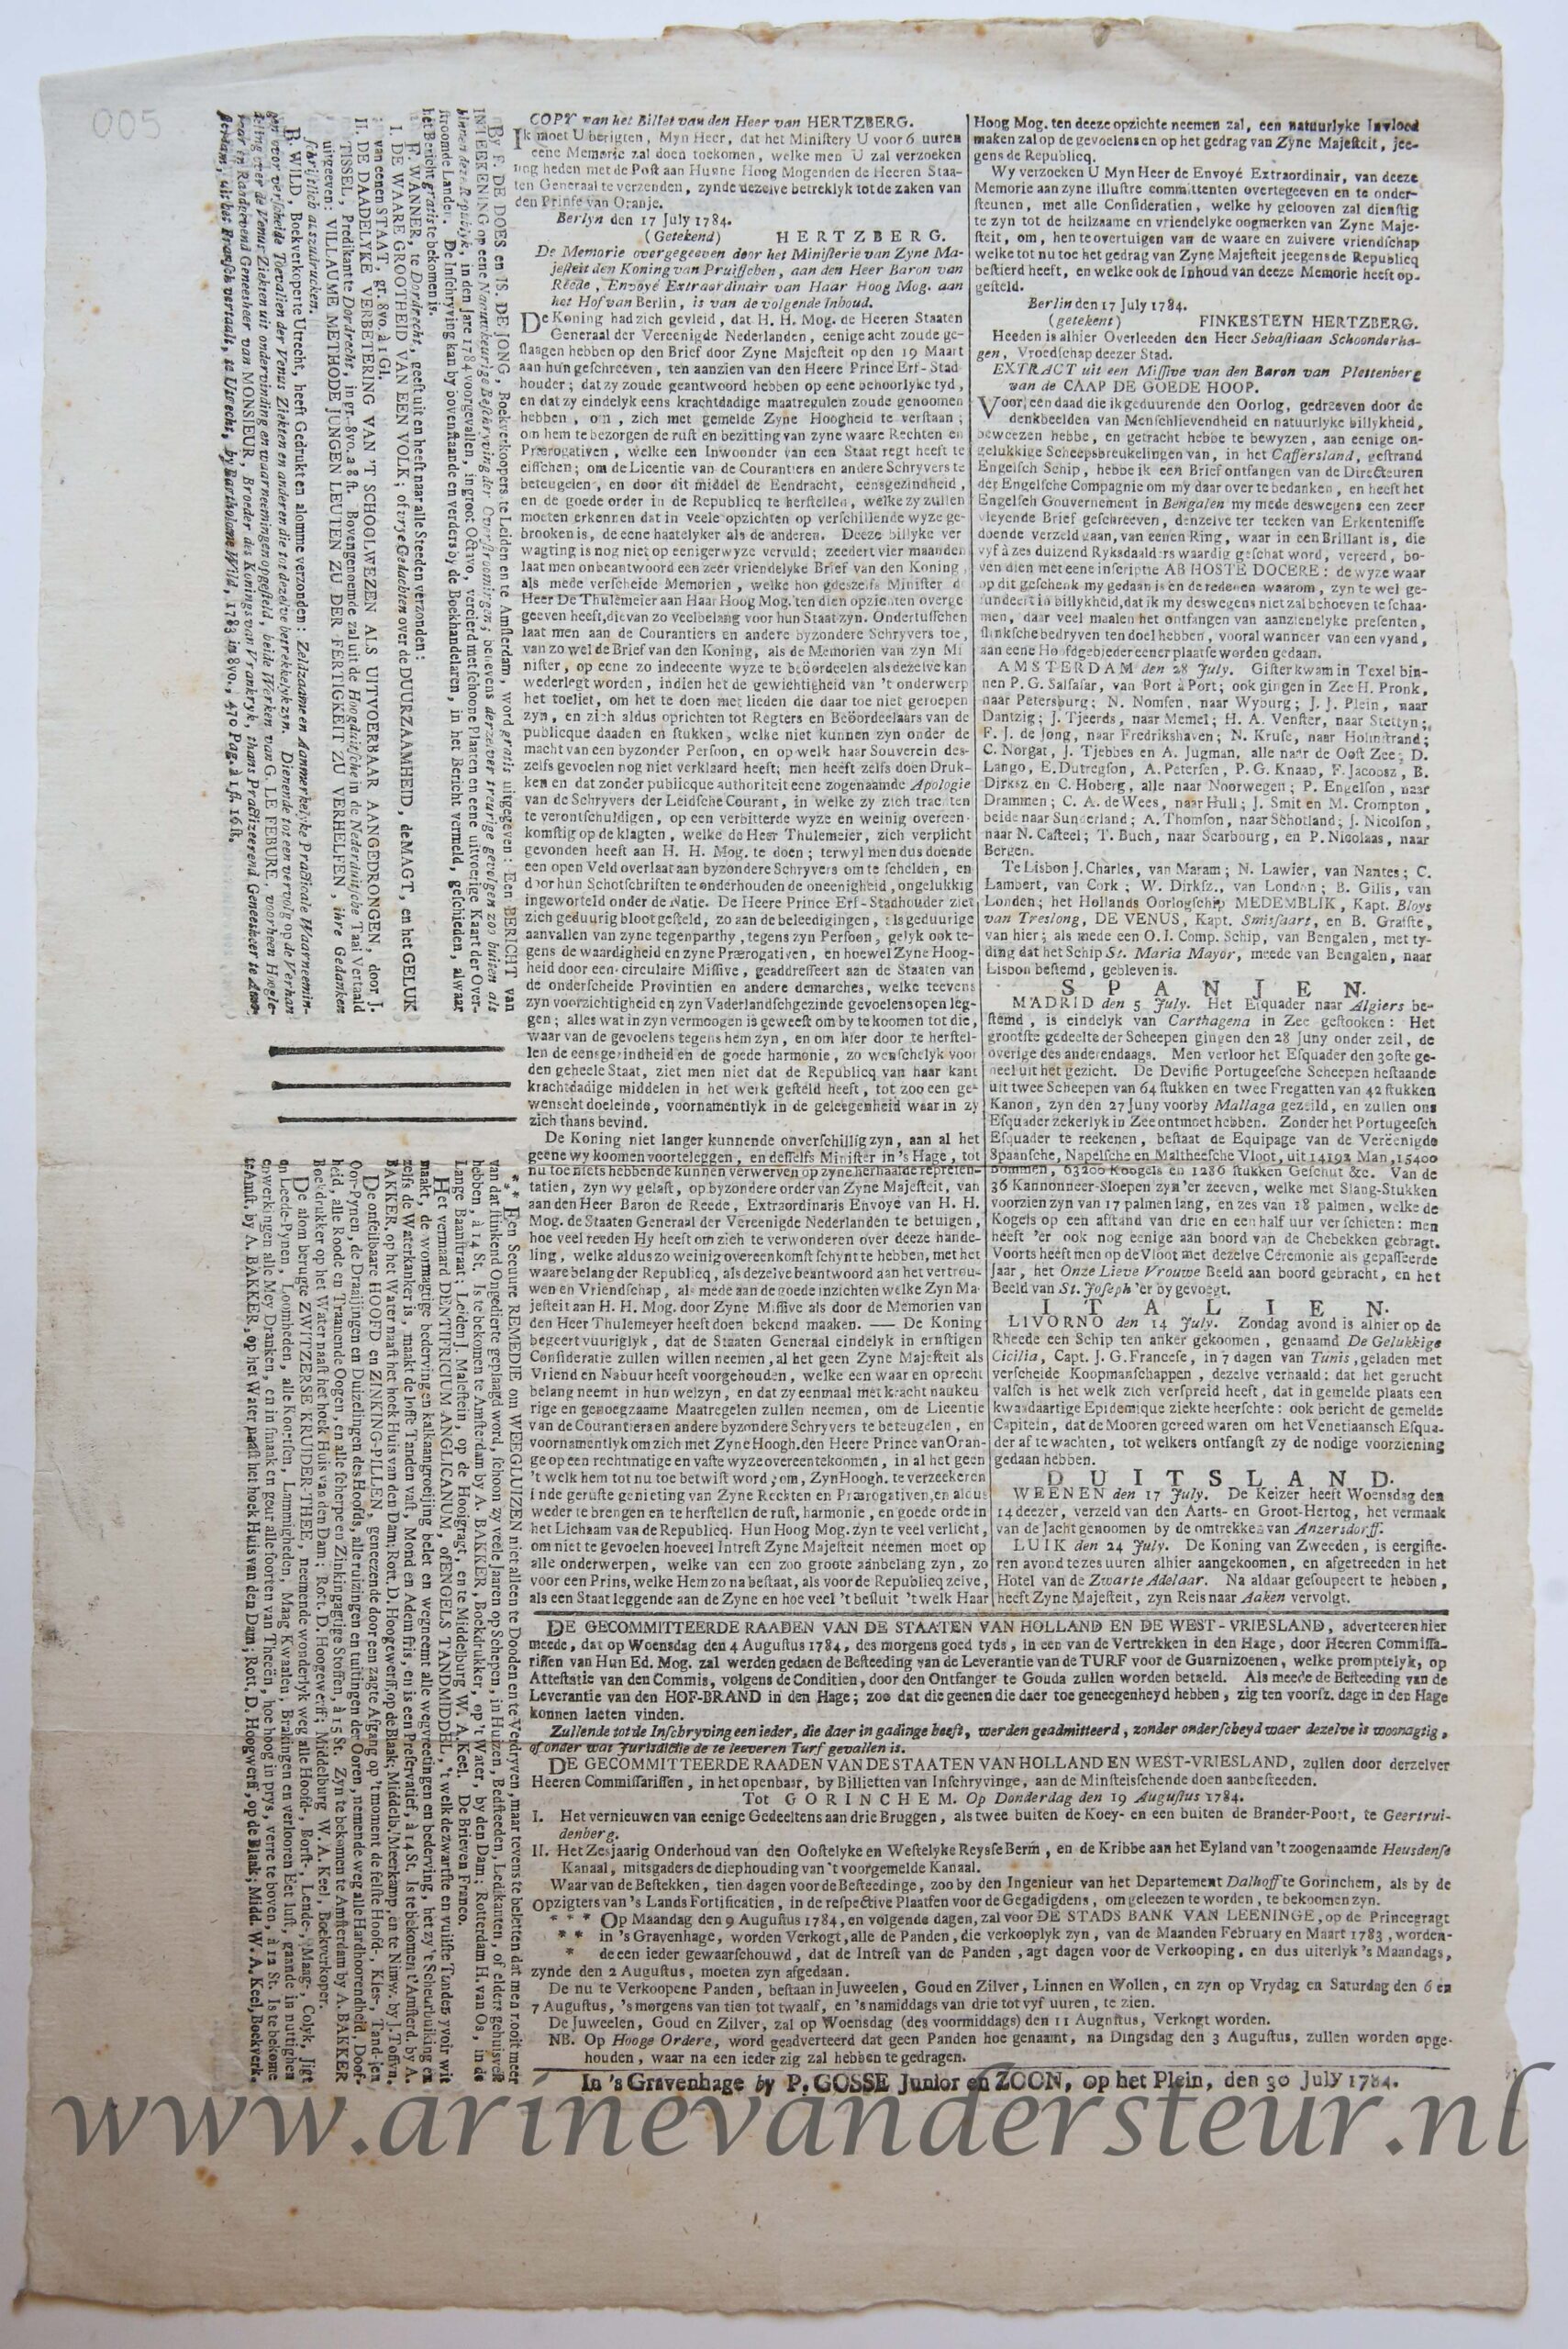 [Newspaper/Krant 1784] ’s Gravenhaagse Vrydagse Courant Van den 30sten July 1784, no 92, 1p.